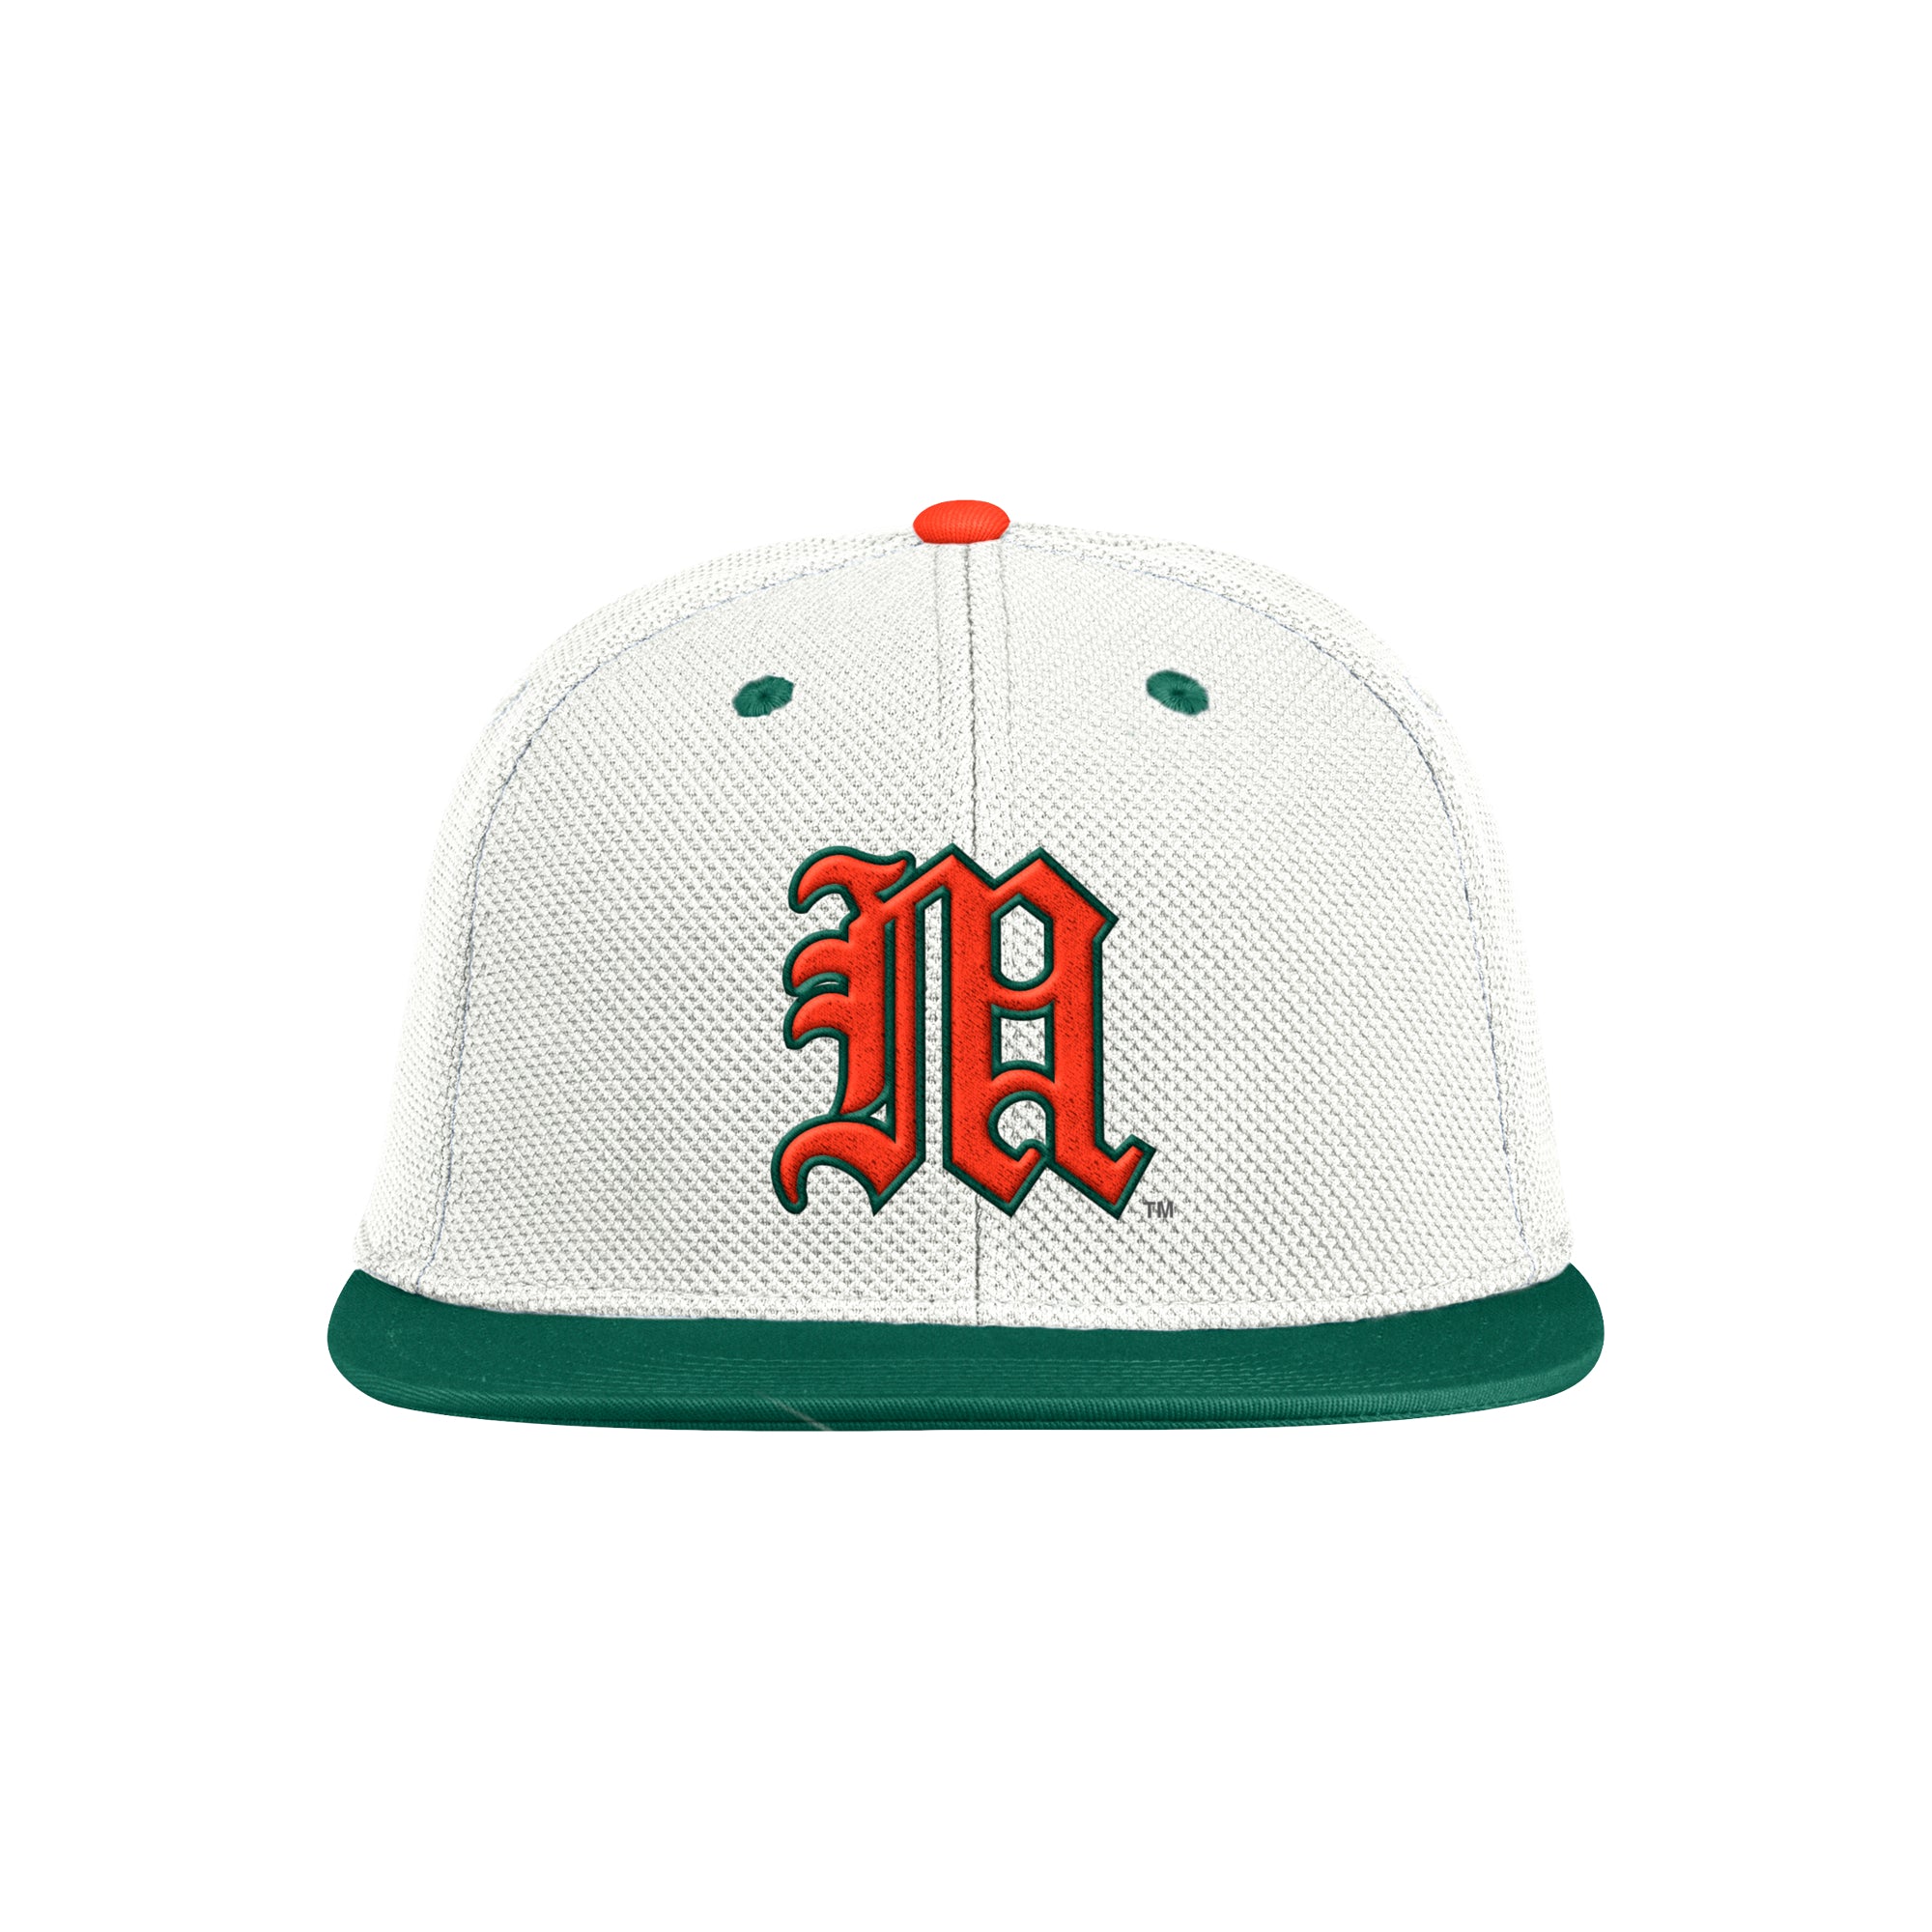 Miami Hurricanes adidas On-Field Baseball Hat - White/Orange M